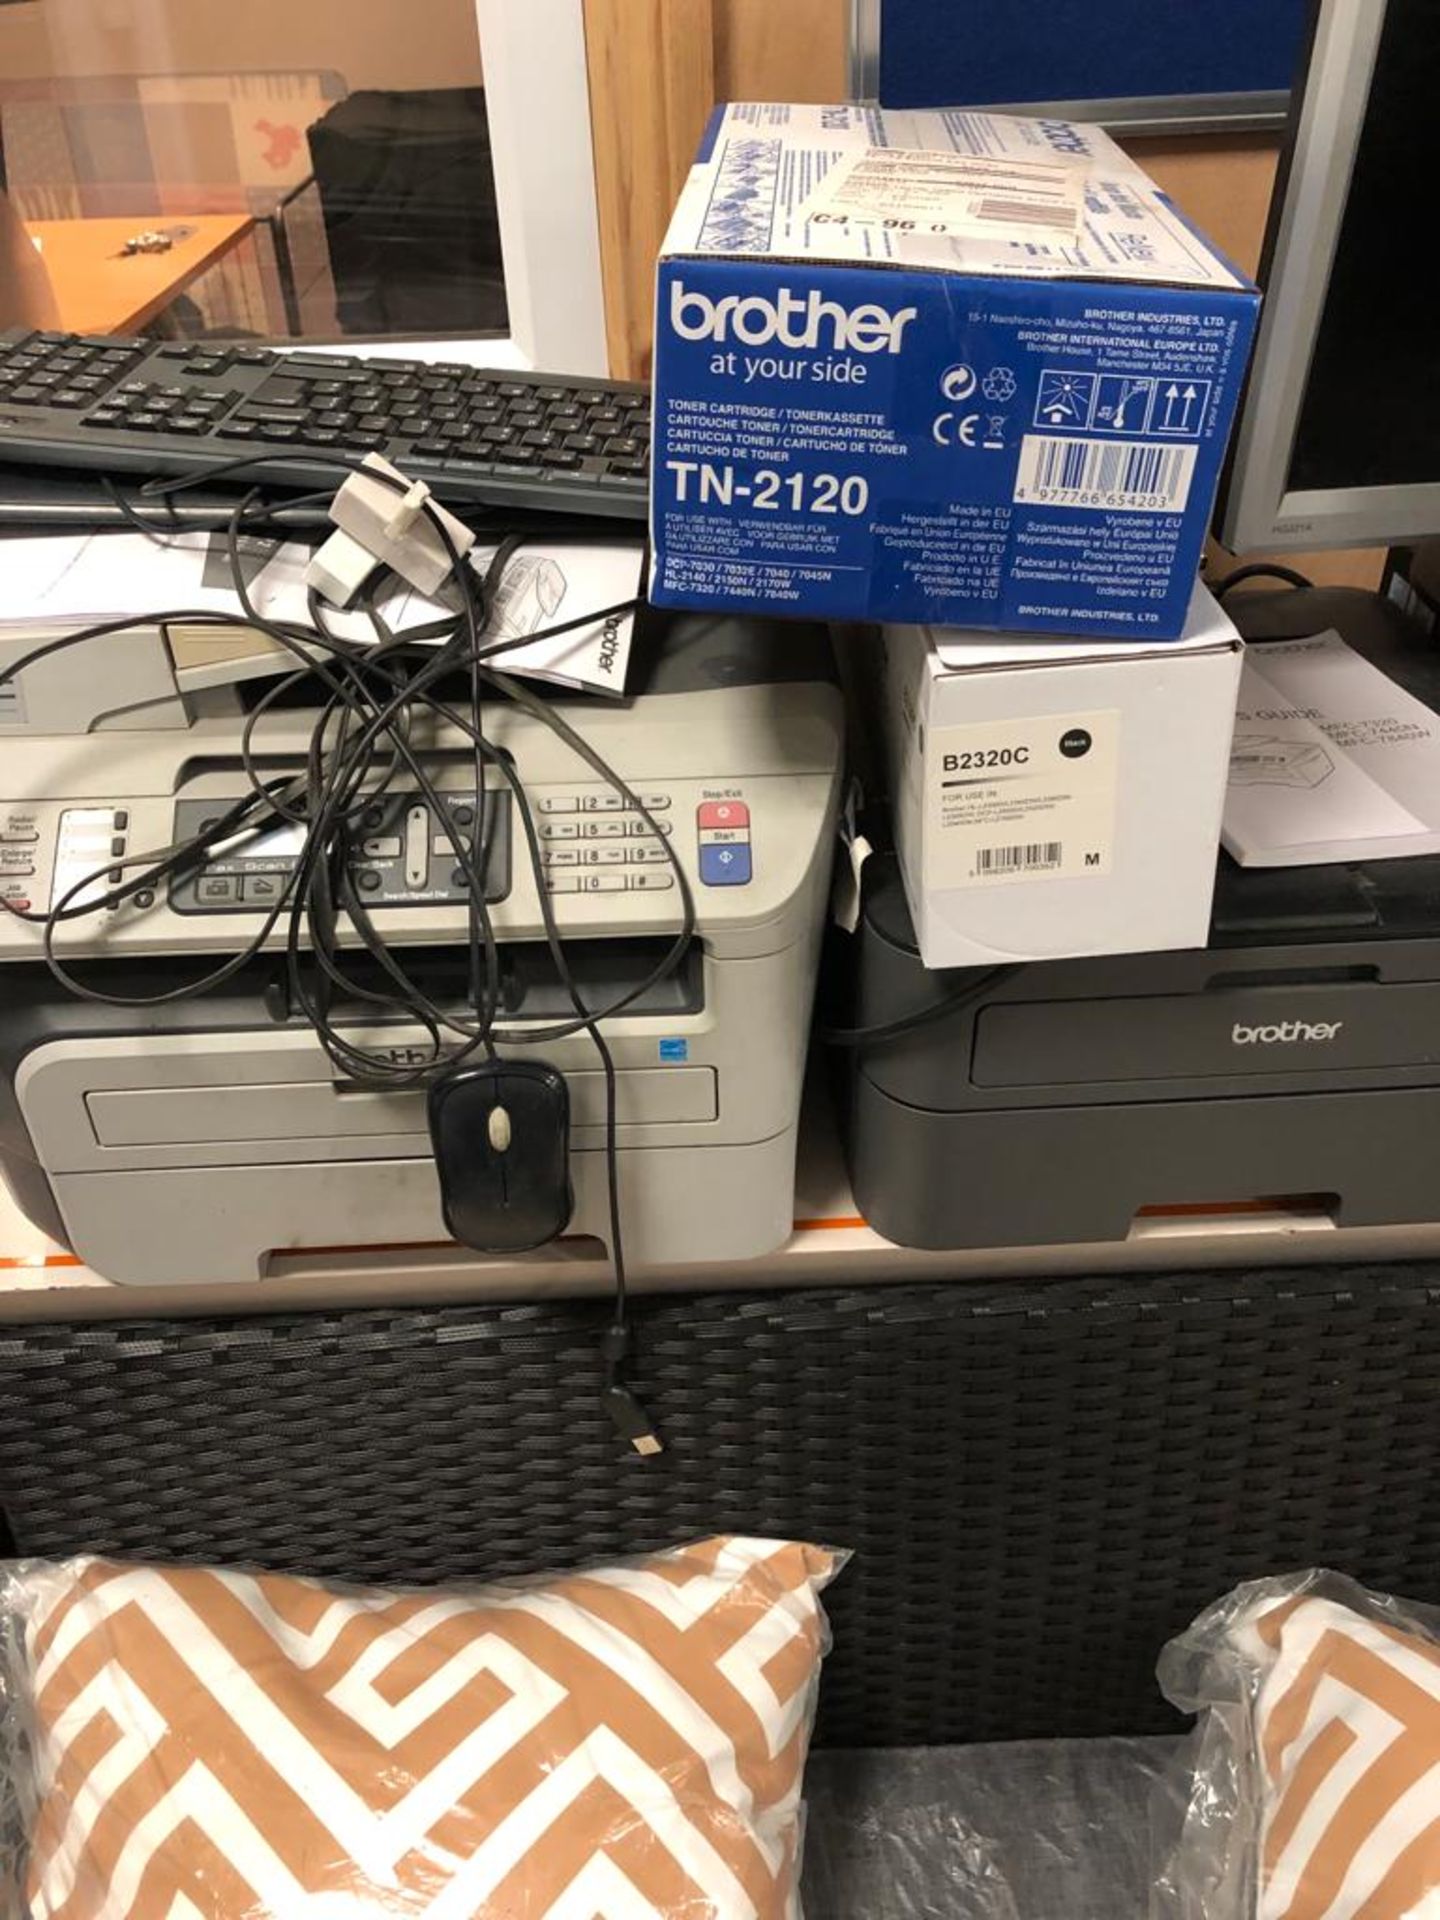 2 x Printers And 2 x Monitors